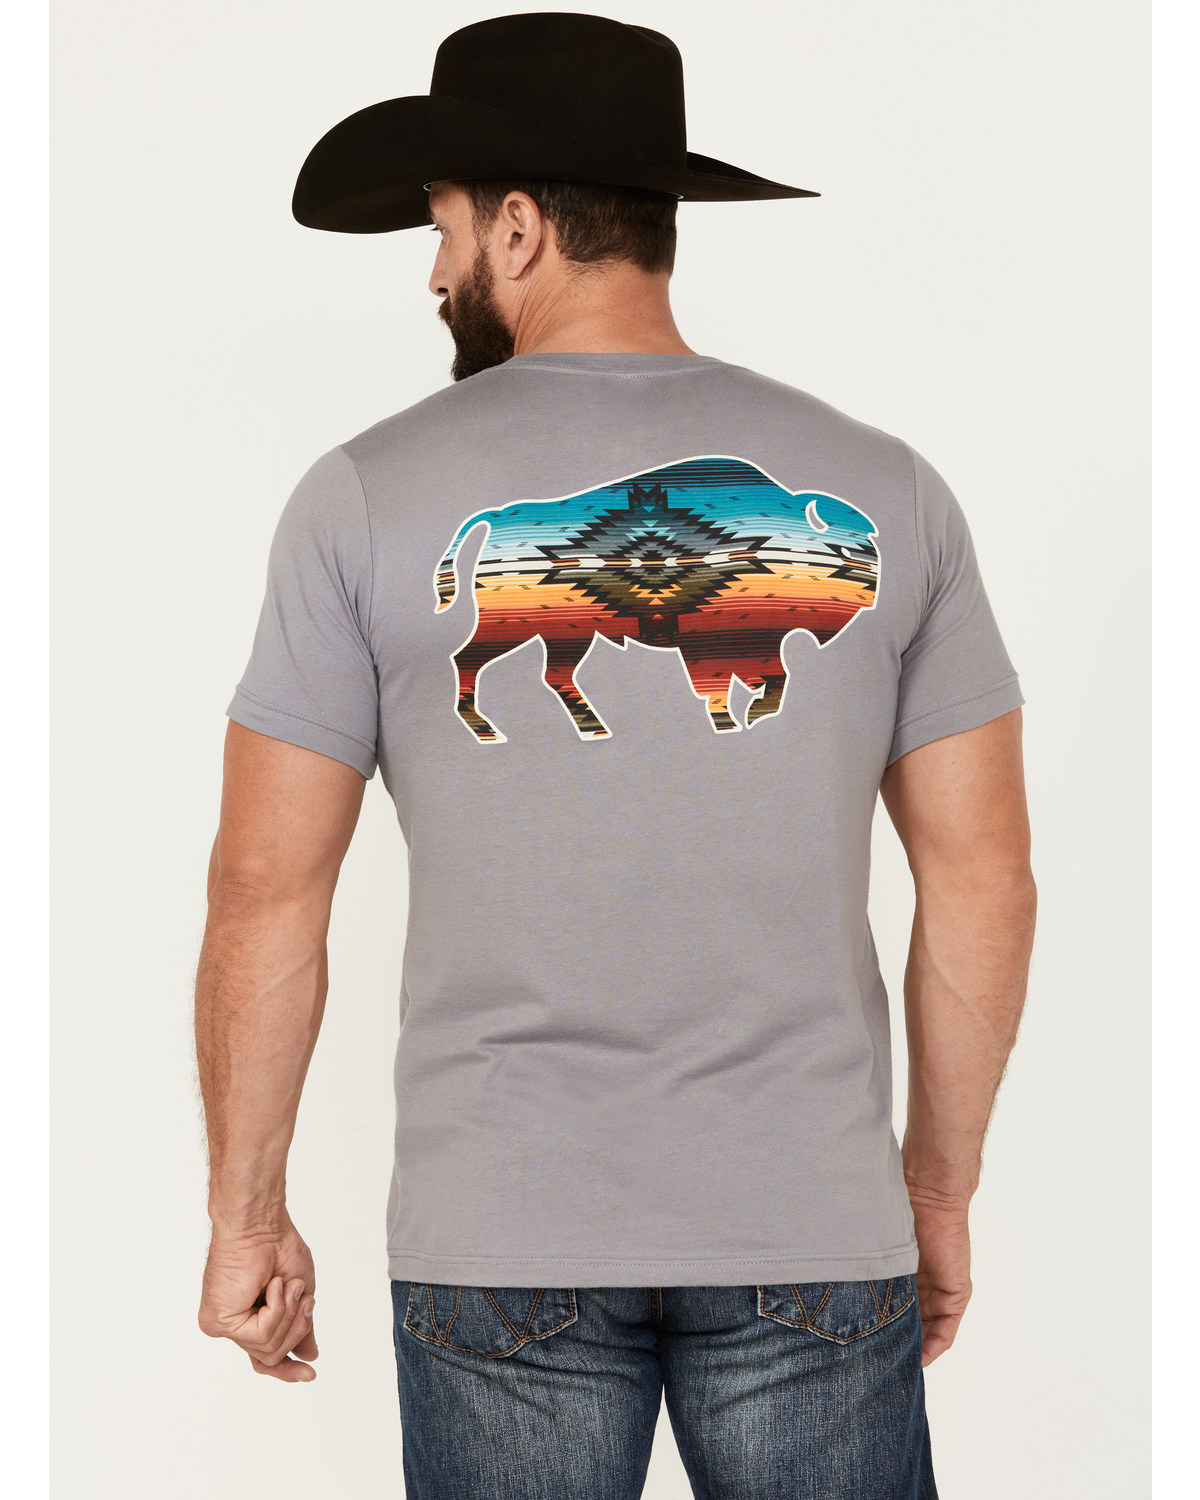 Pendleton Men's Saltillo Sunset Bison Short Sleeve Graphic T-Shirt